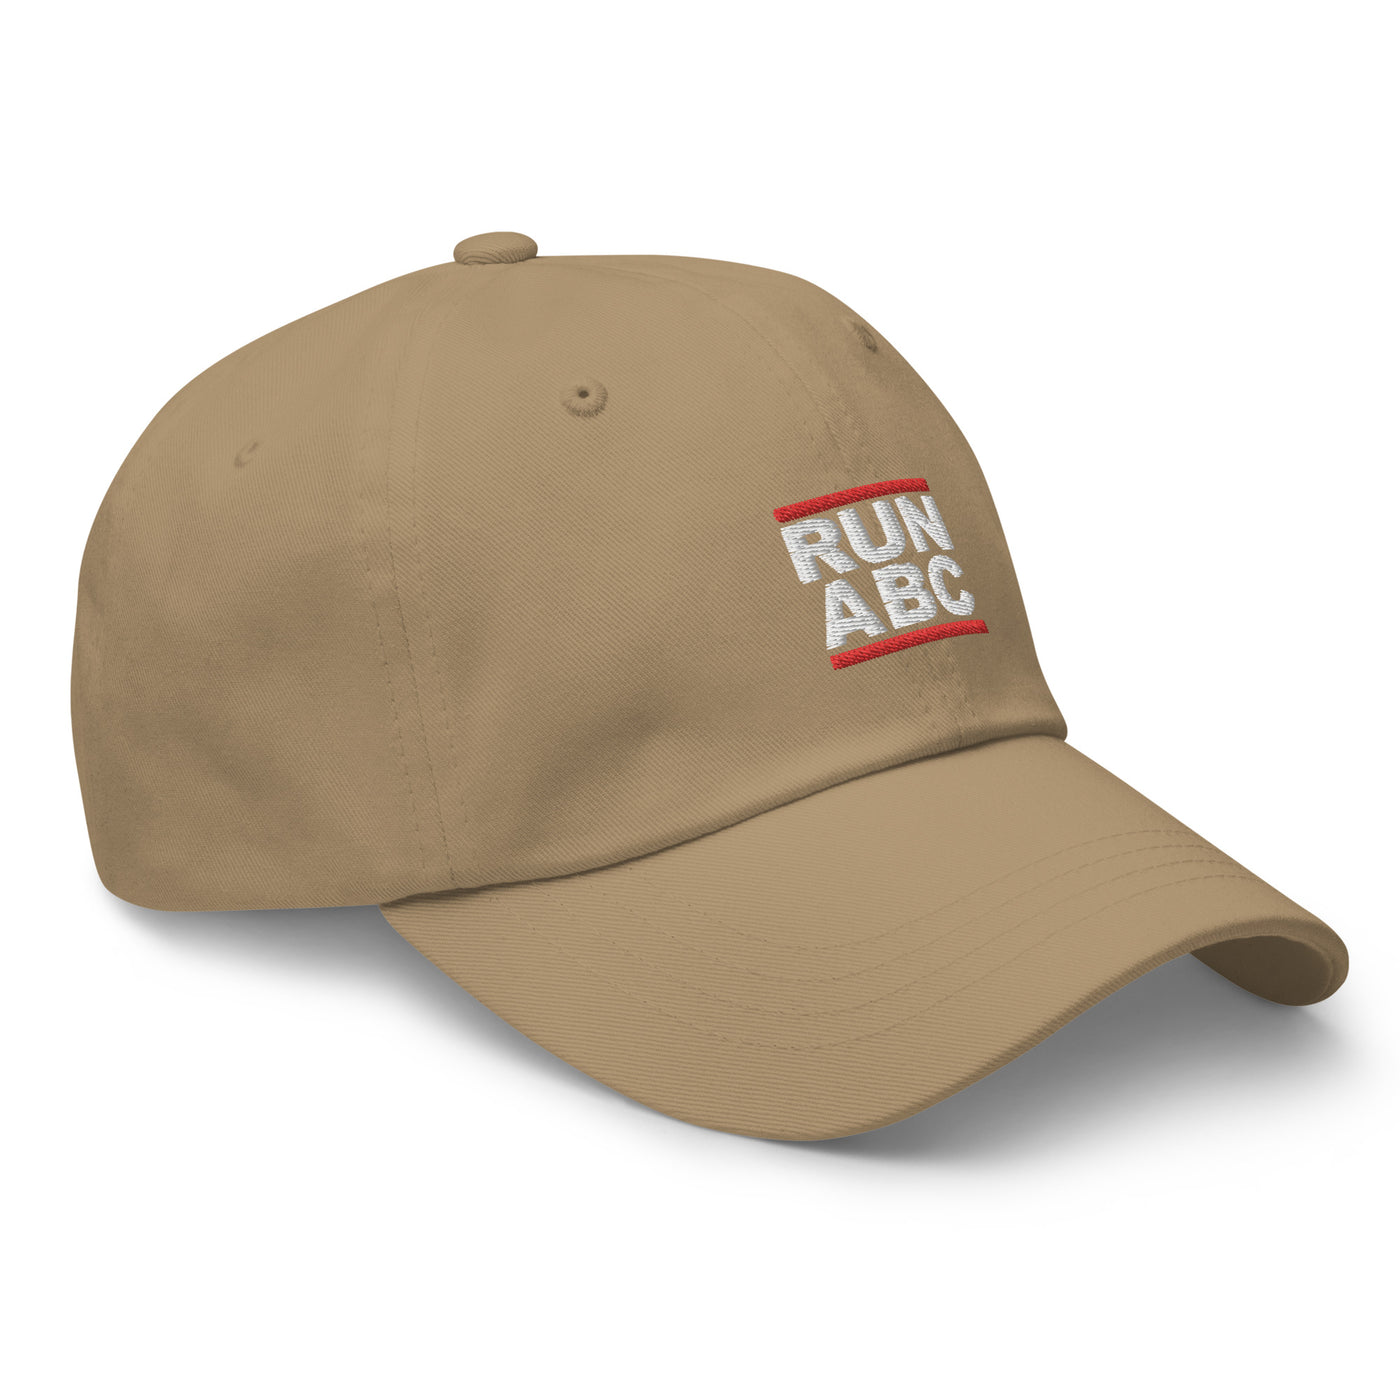 RUN ABC unisex hat